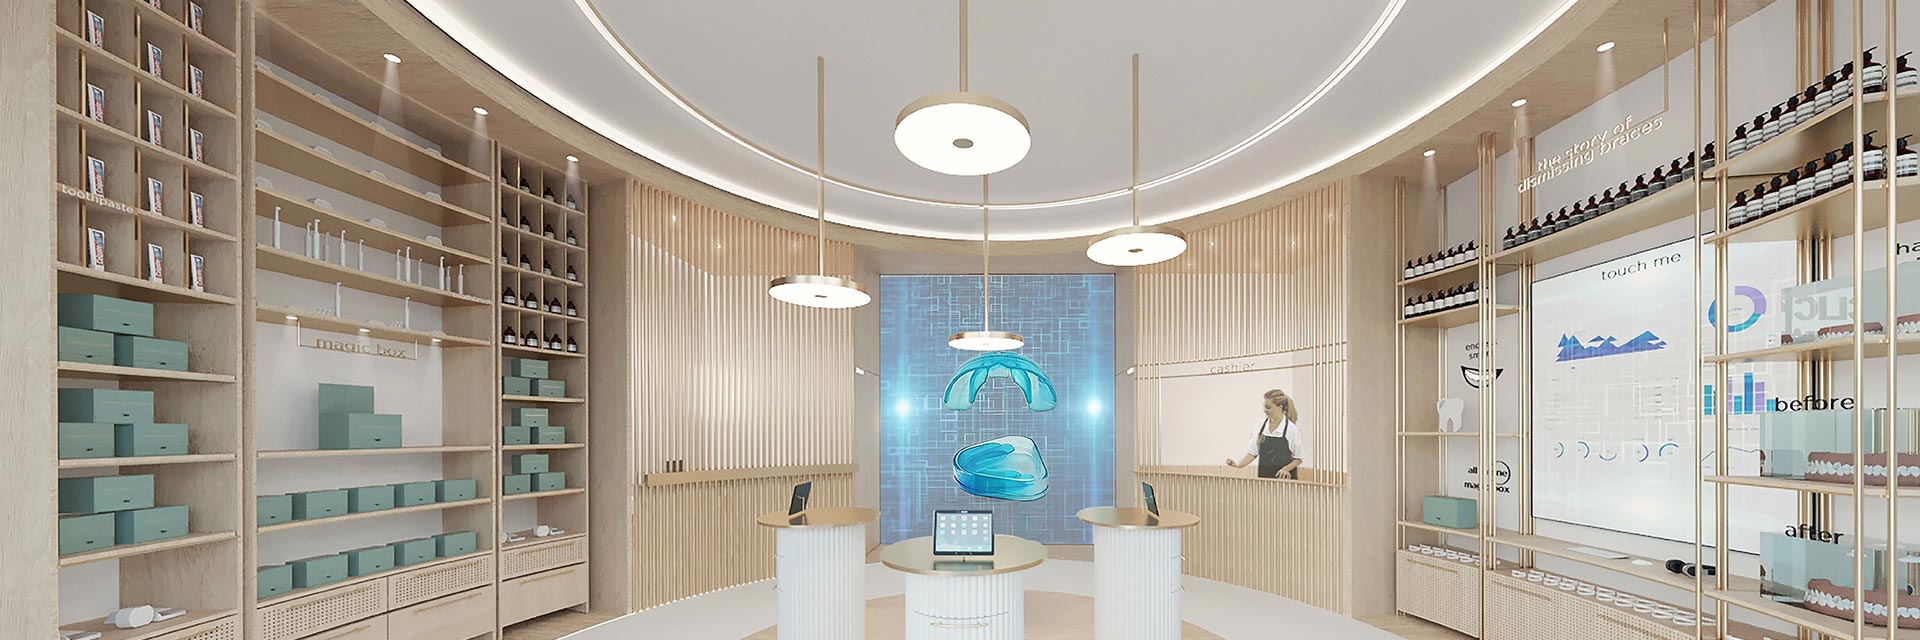 İpek Baycan Architects - Japan Dental Store Design for Invisalign